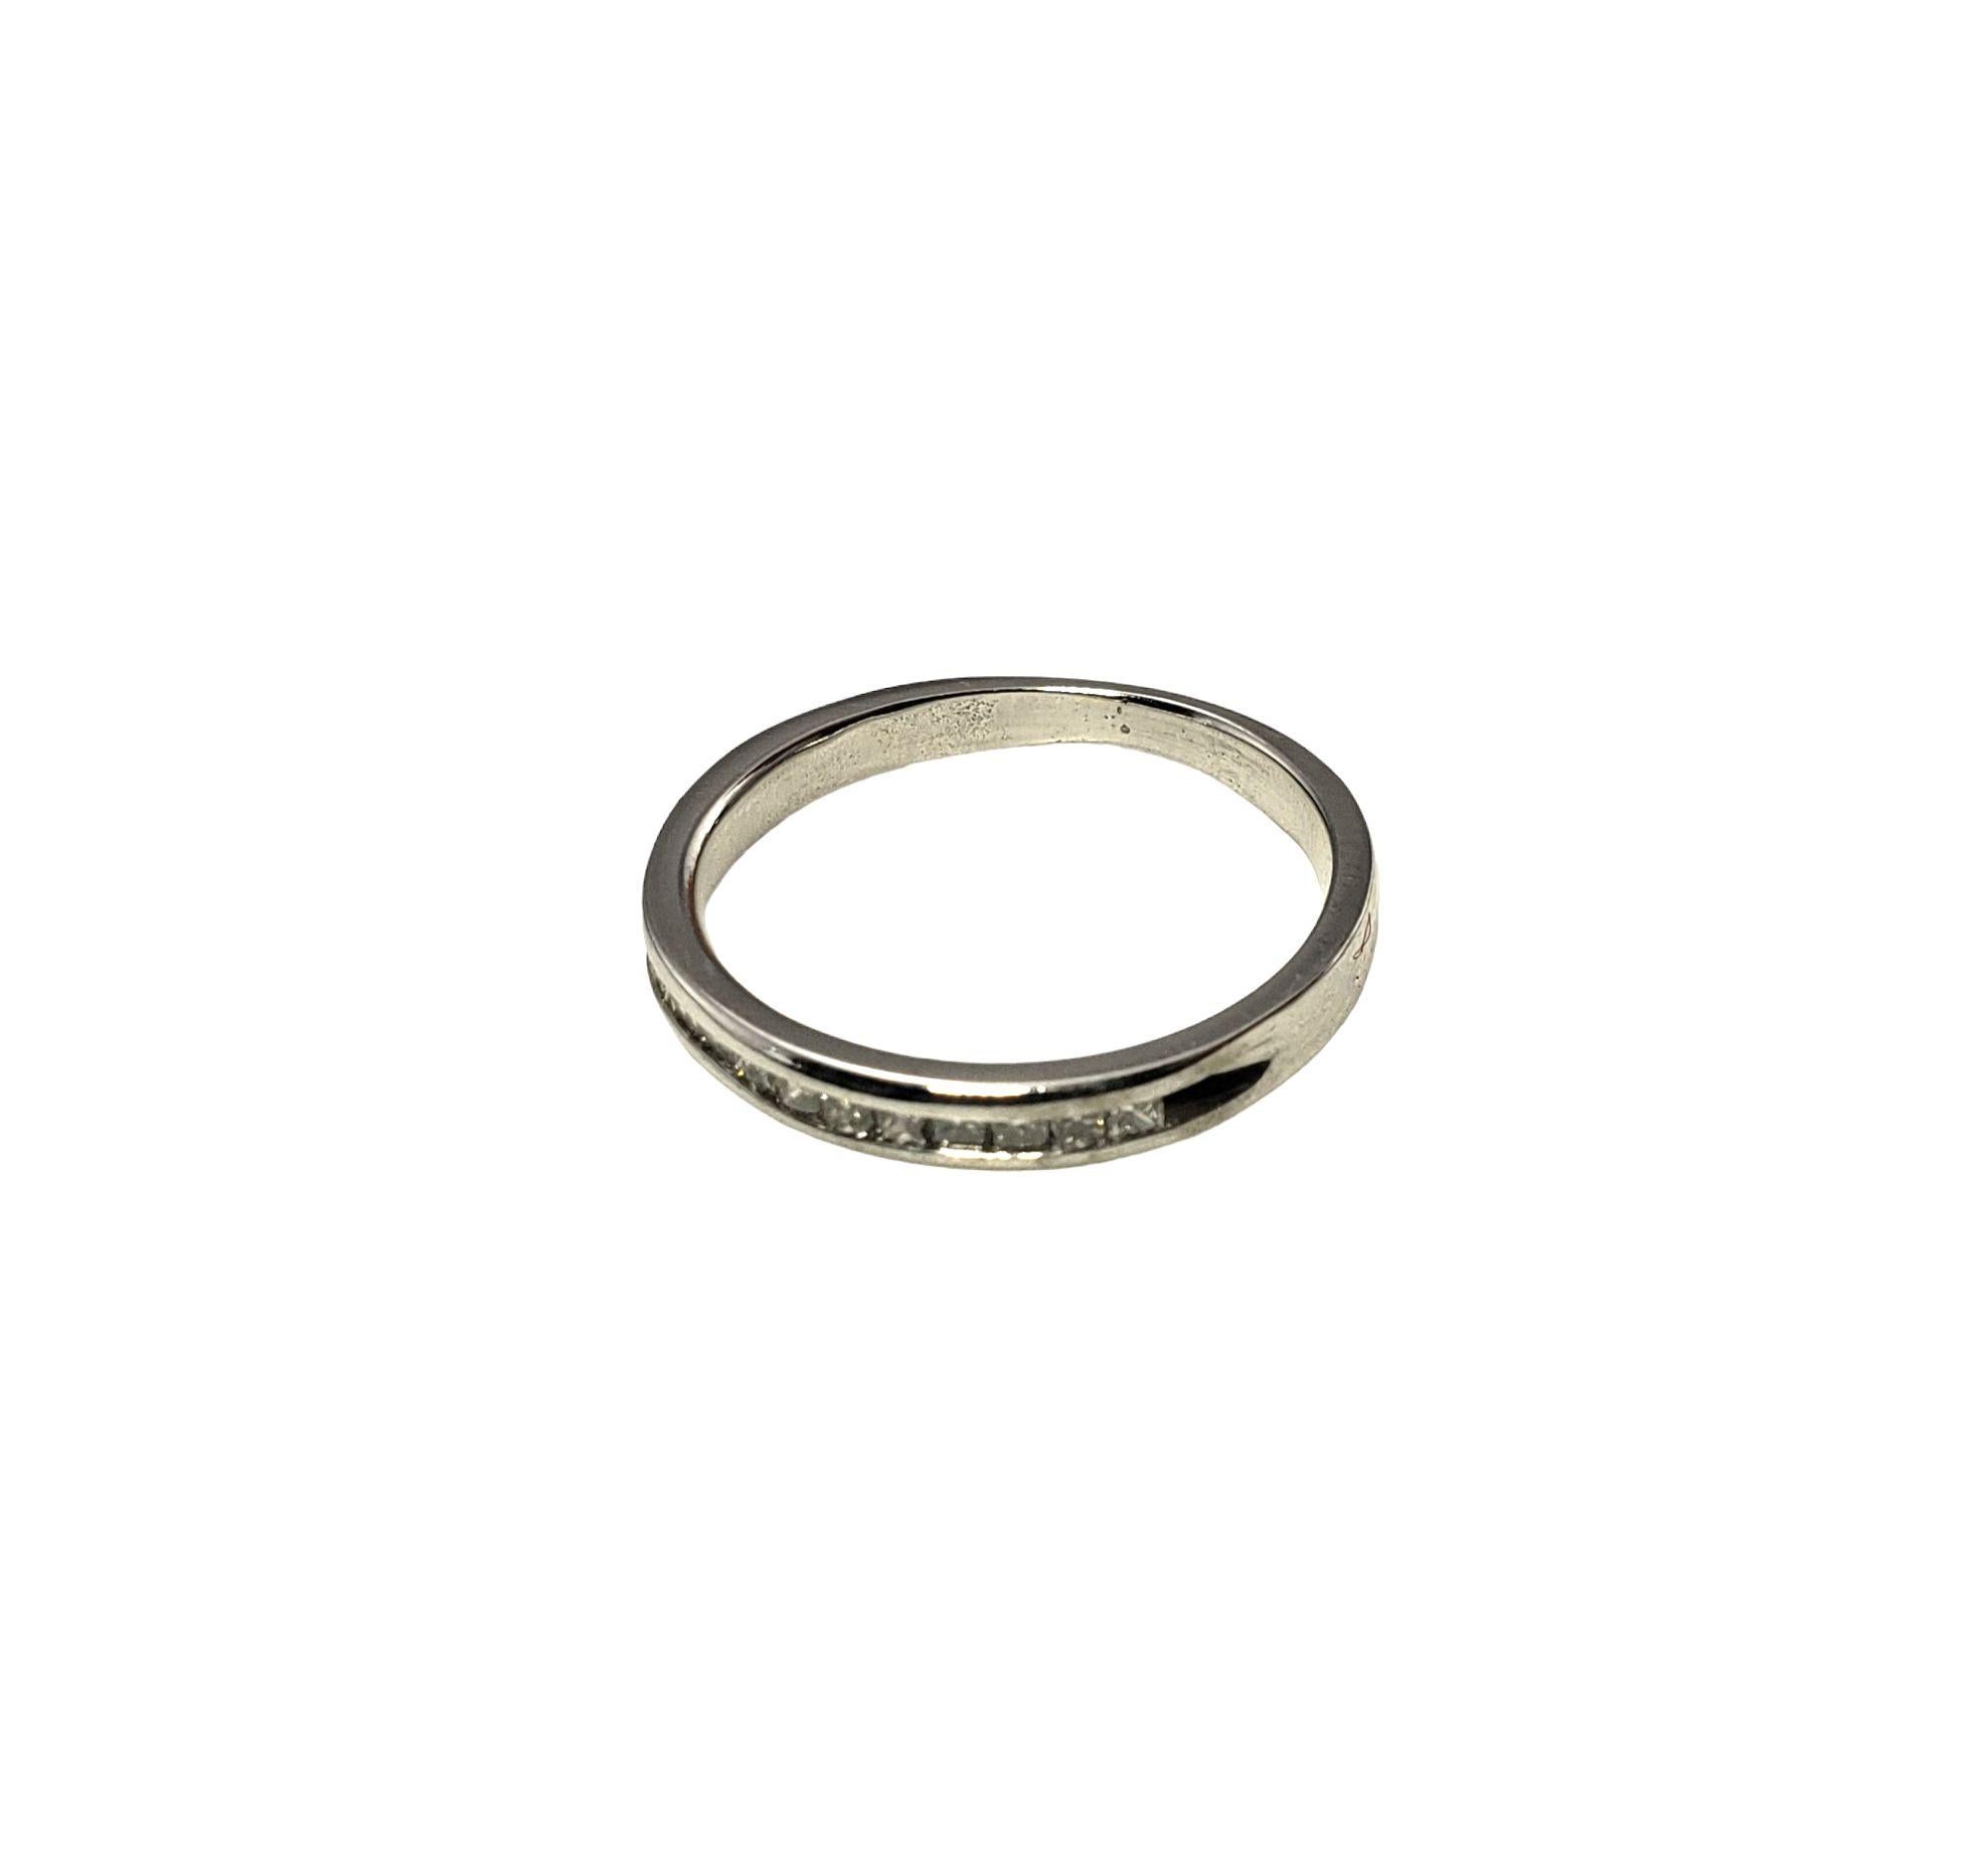 10 Karat White Gold Princess Cut Diamond Band Ring Size 5.75 #13043 For Sale 1